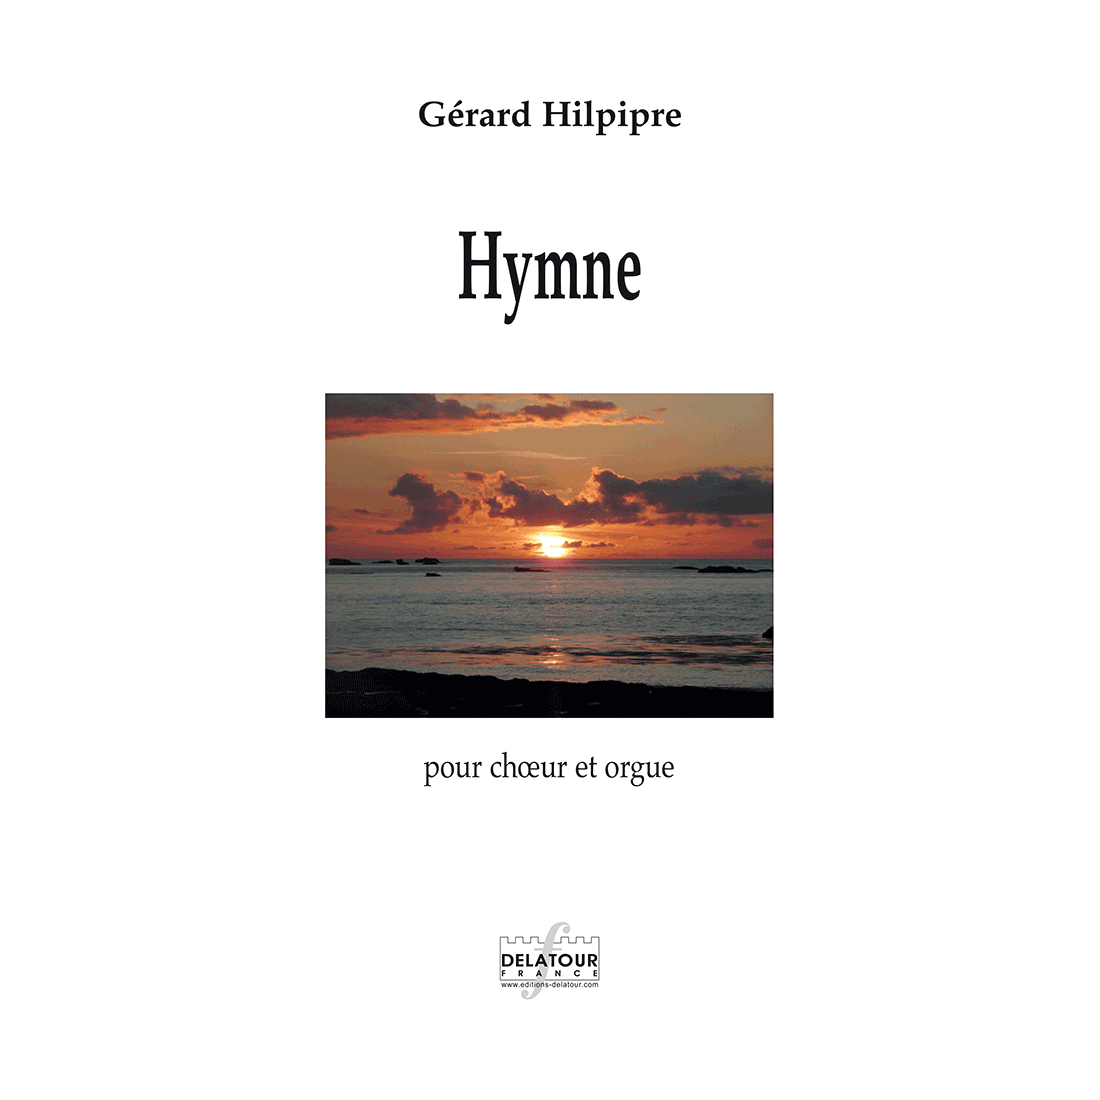 Hymne for choir and organ